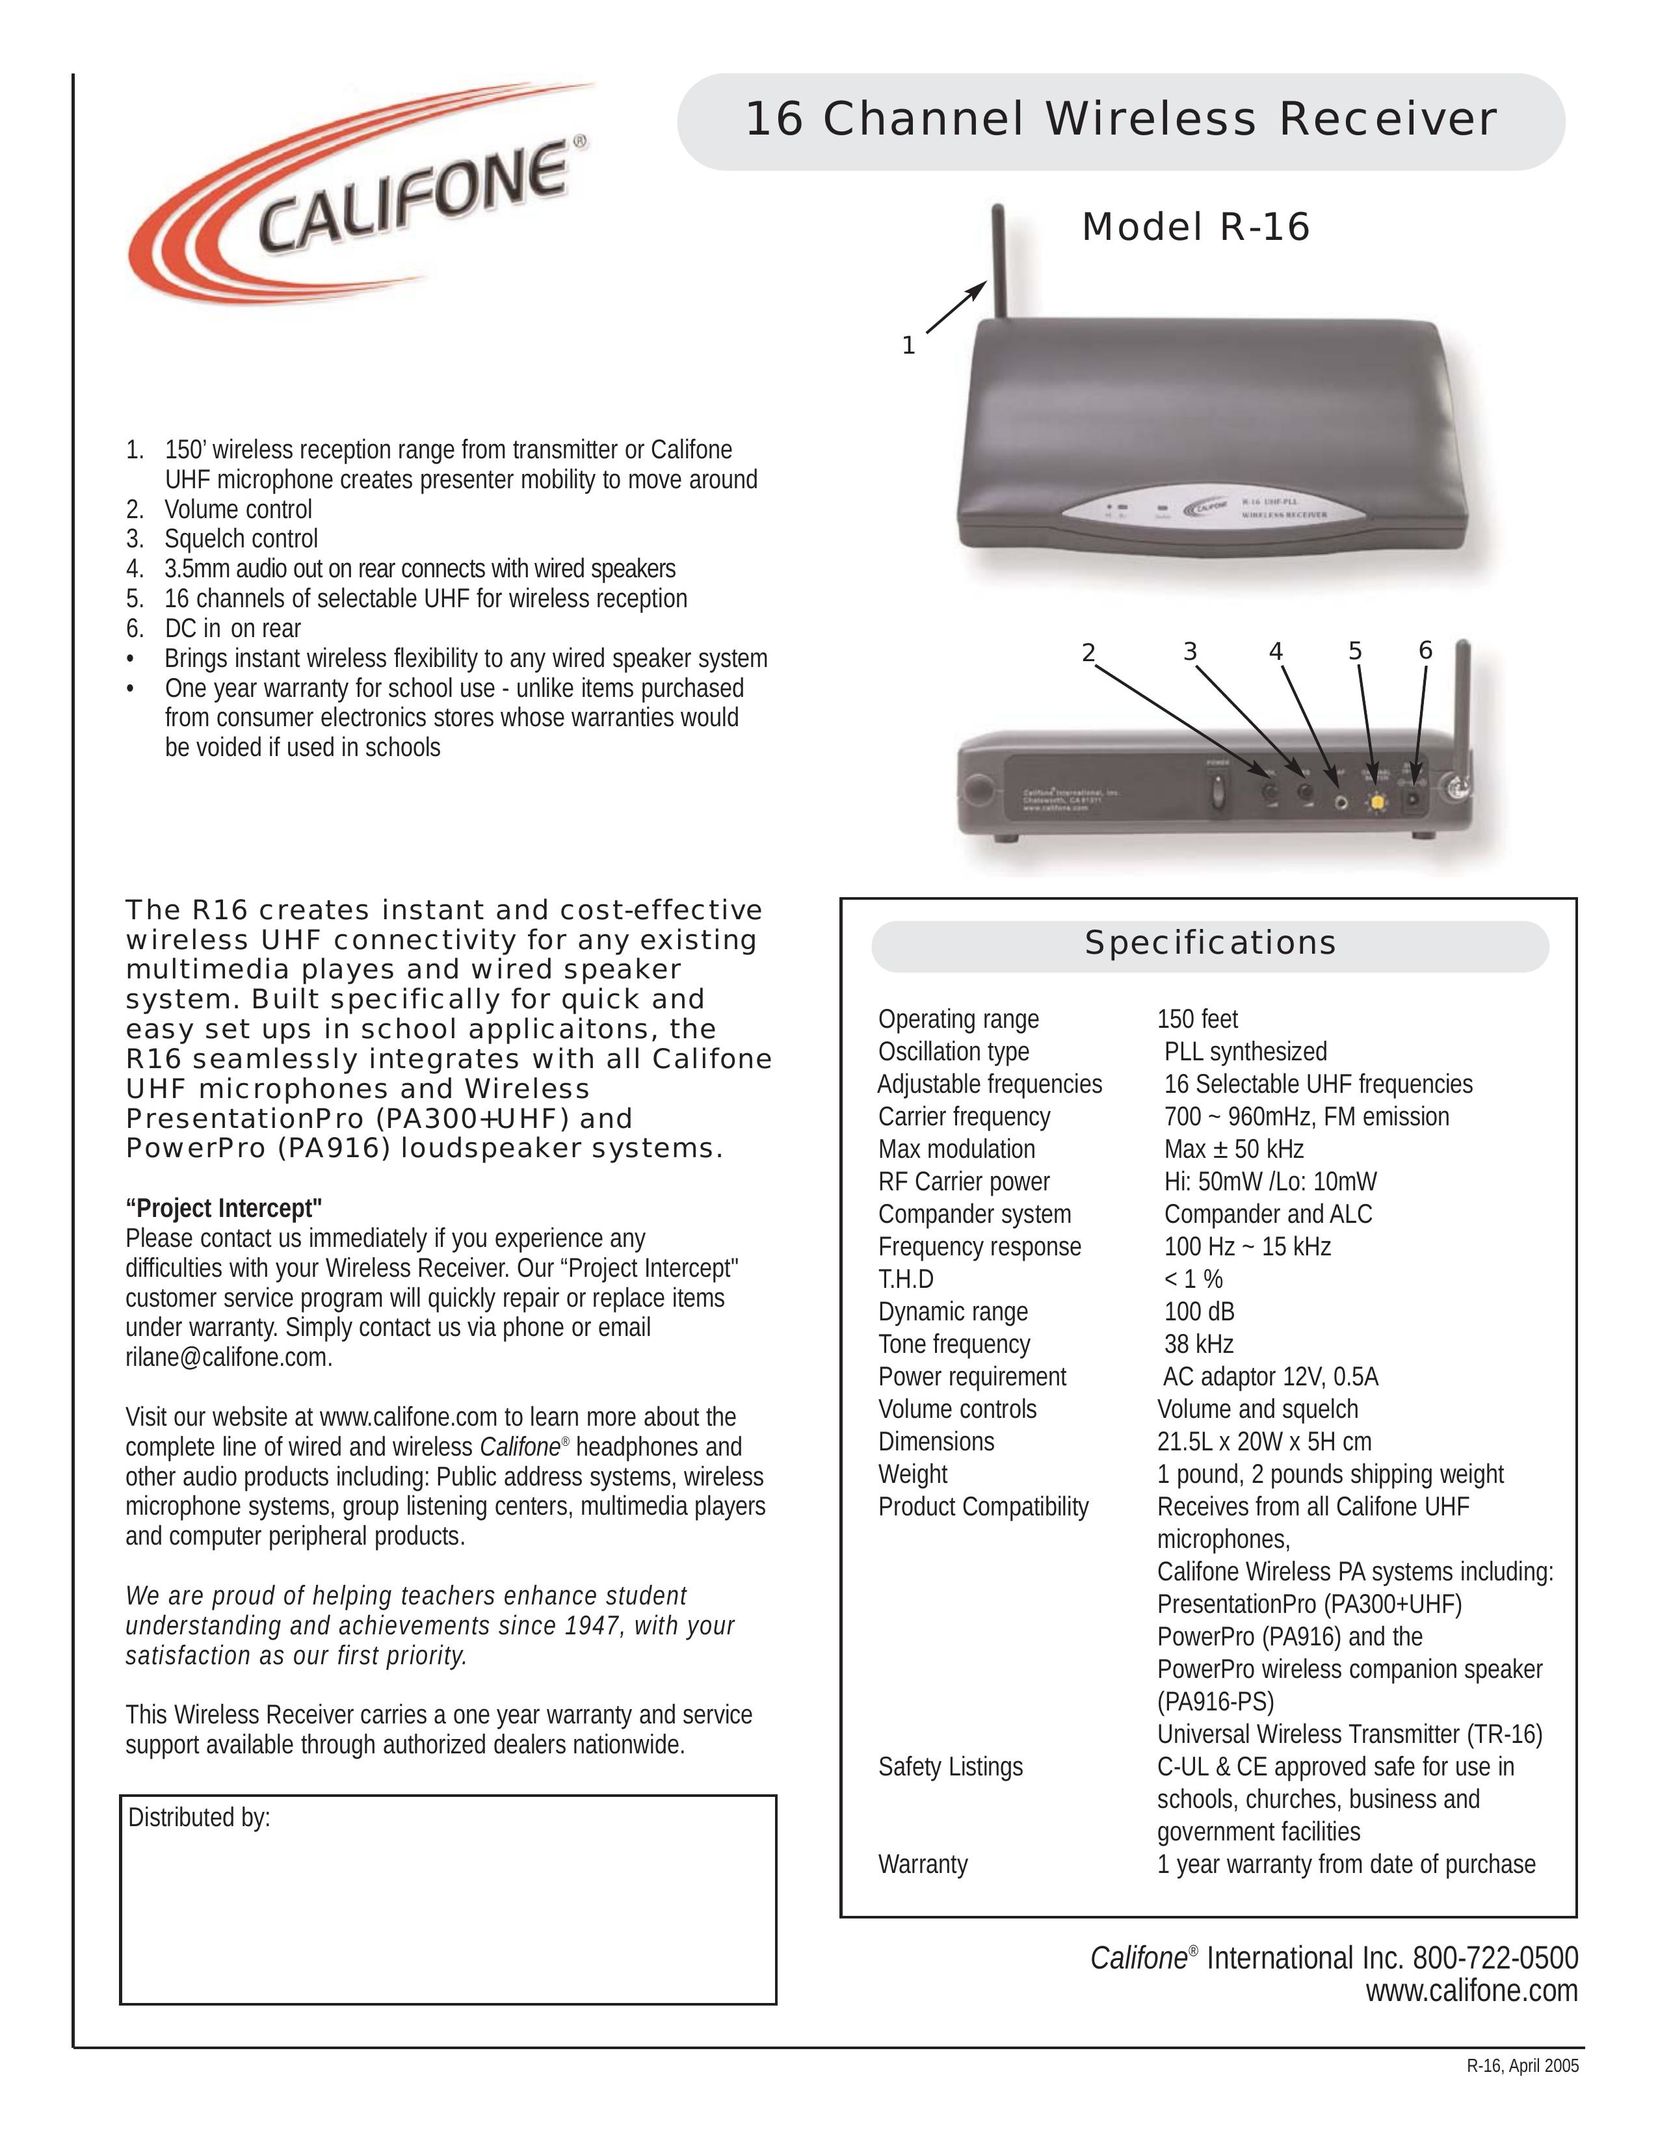 Califone R-16 Network Card User Manual